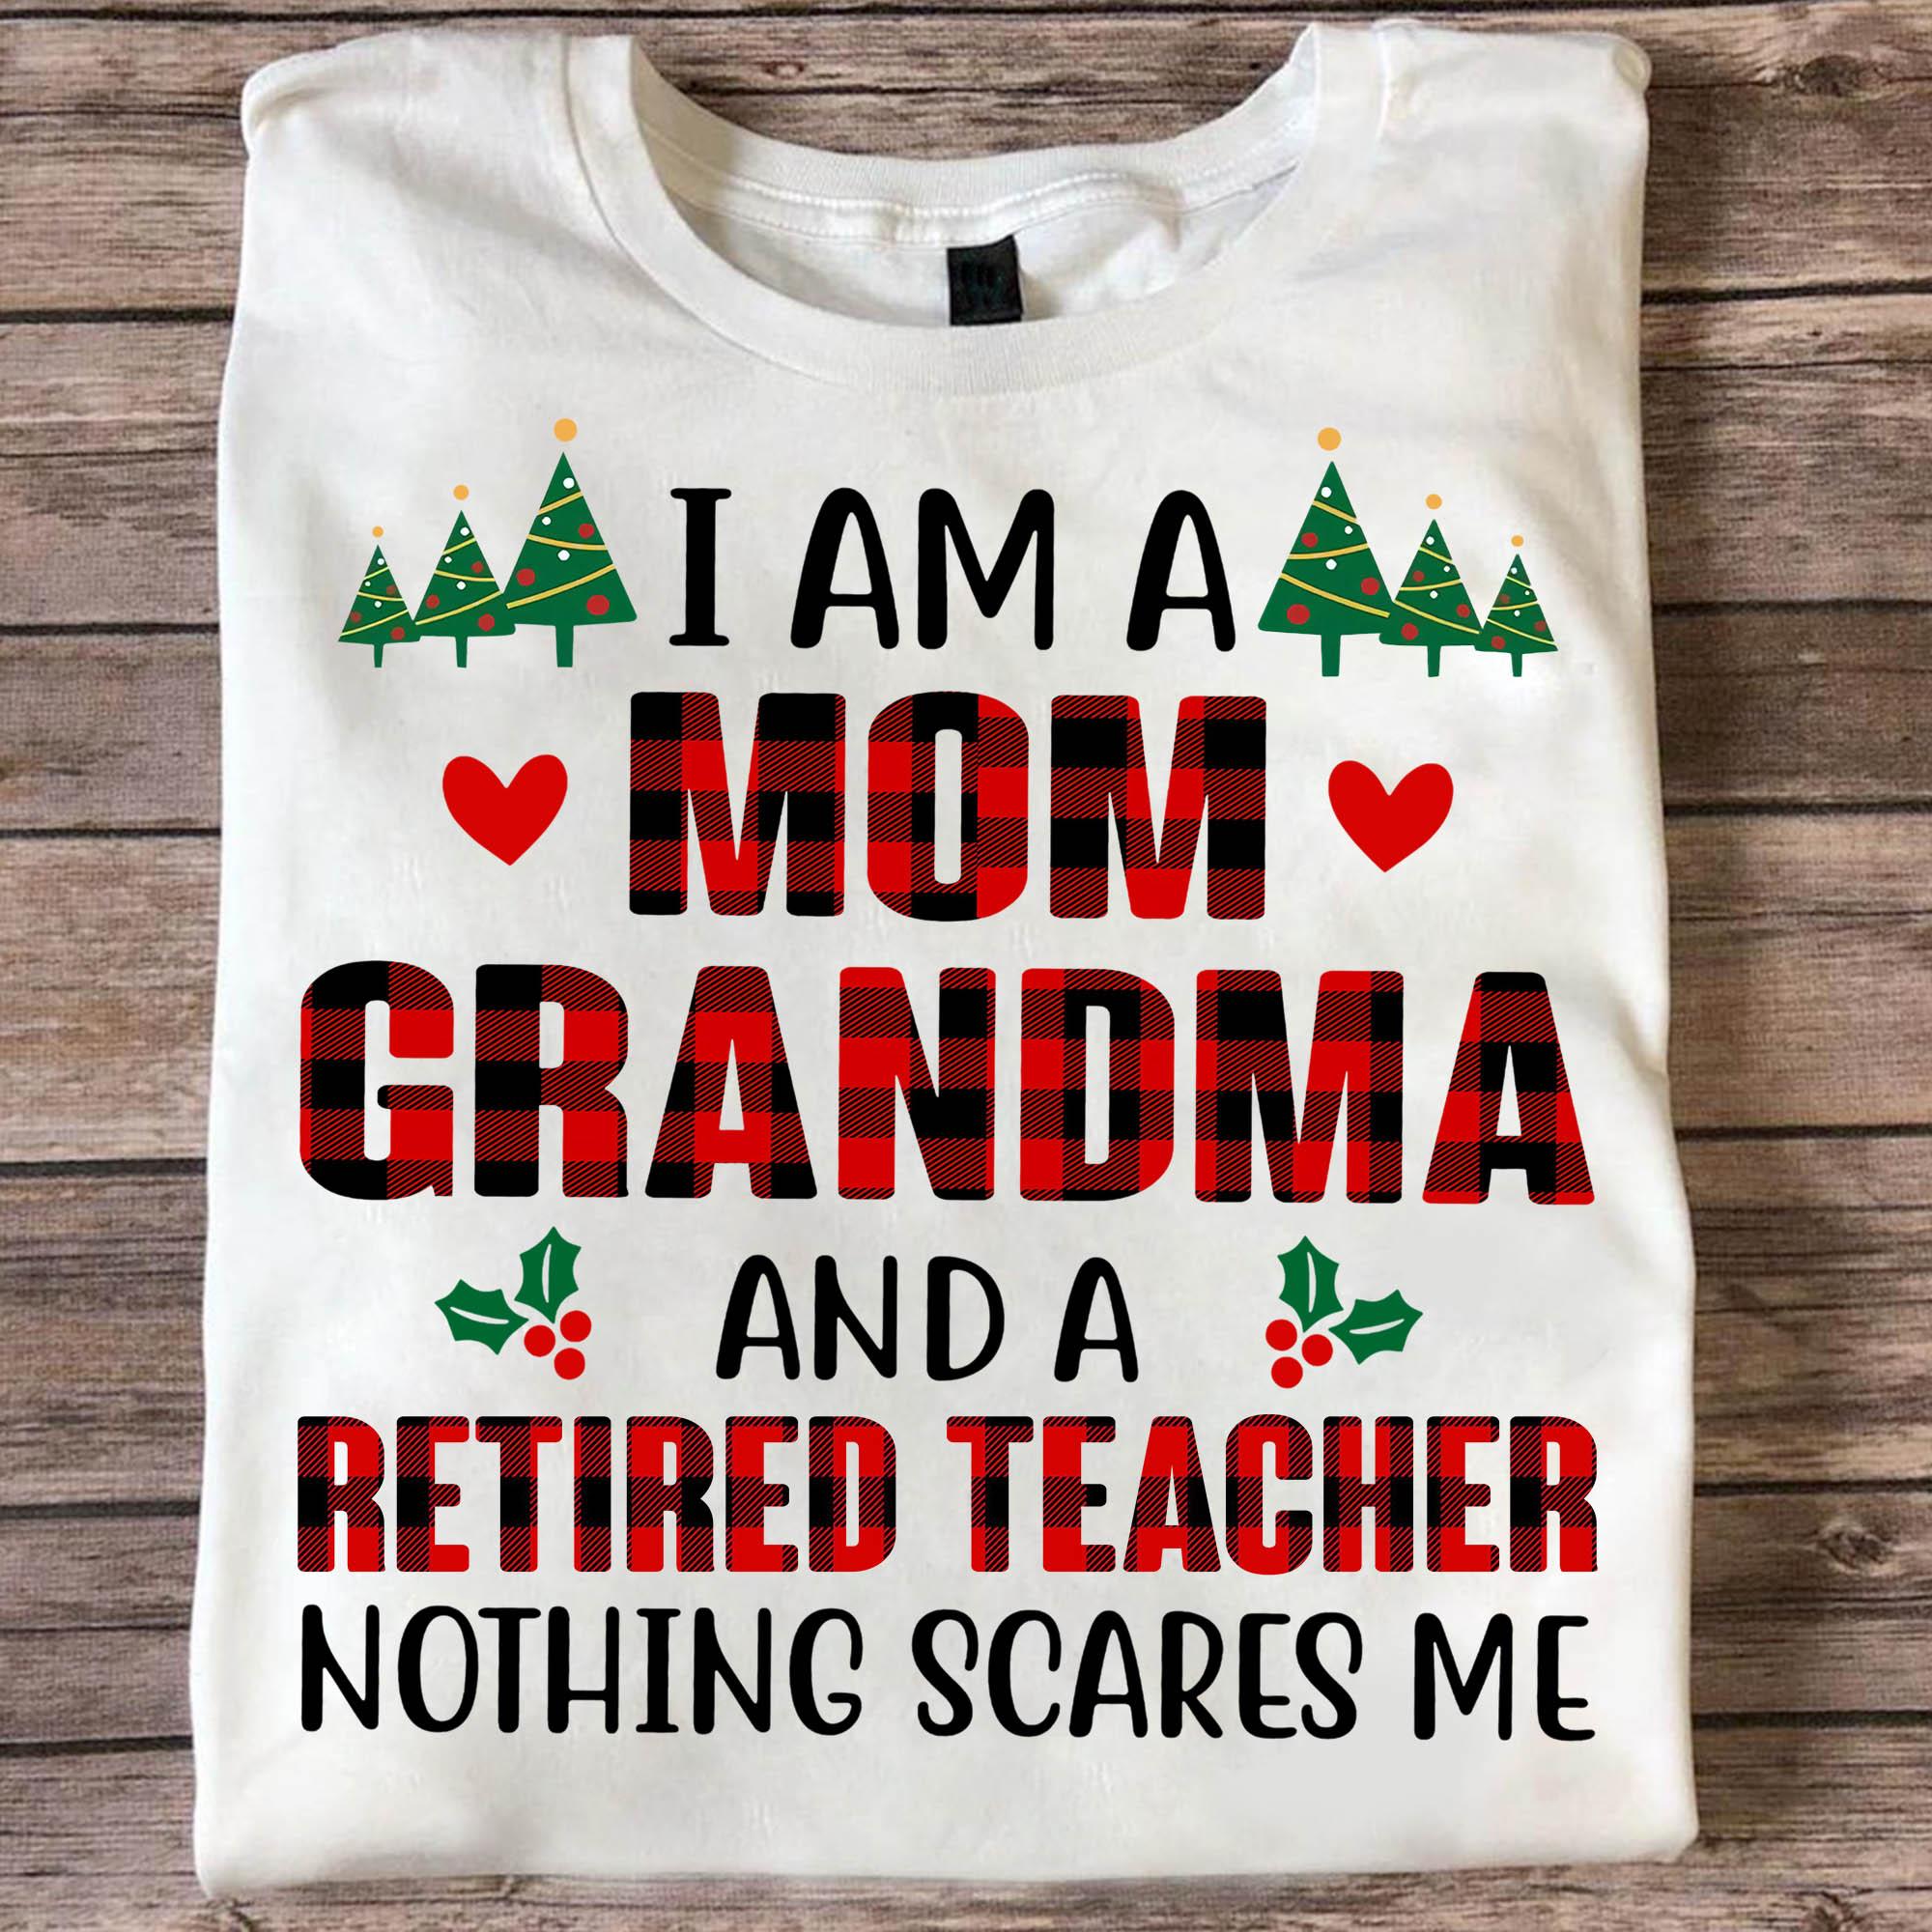 I am a mom grandma and a retired teacher nothing scares me - Gift for teacher, teacher's day T-shirt